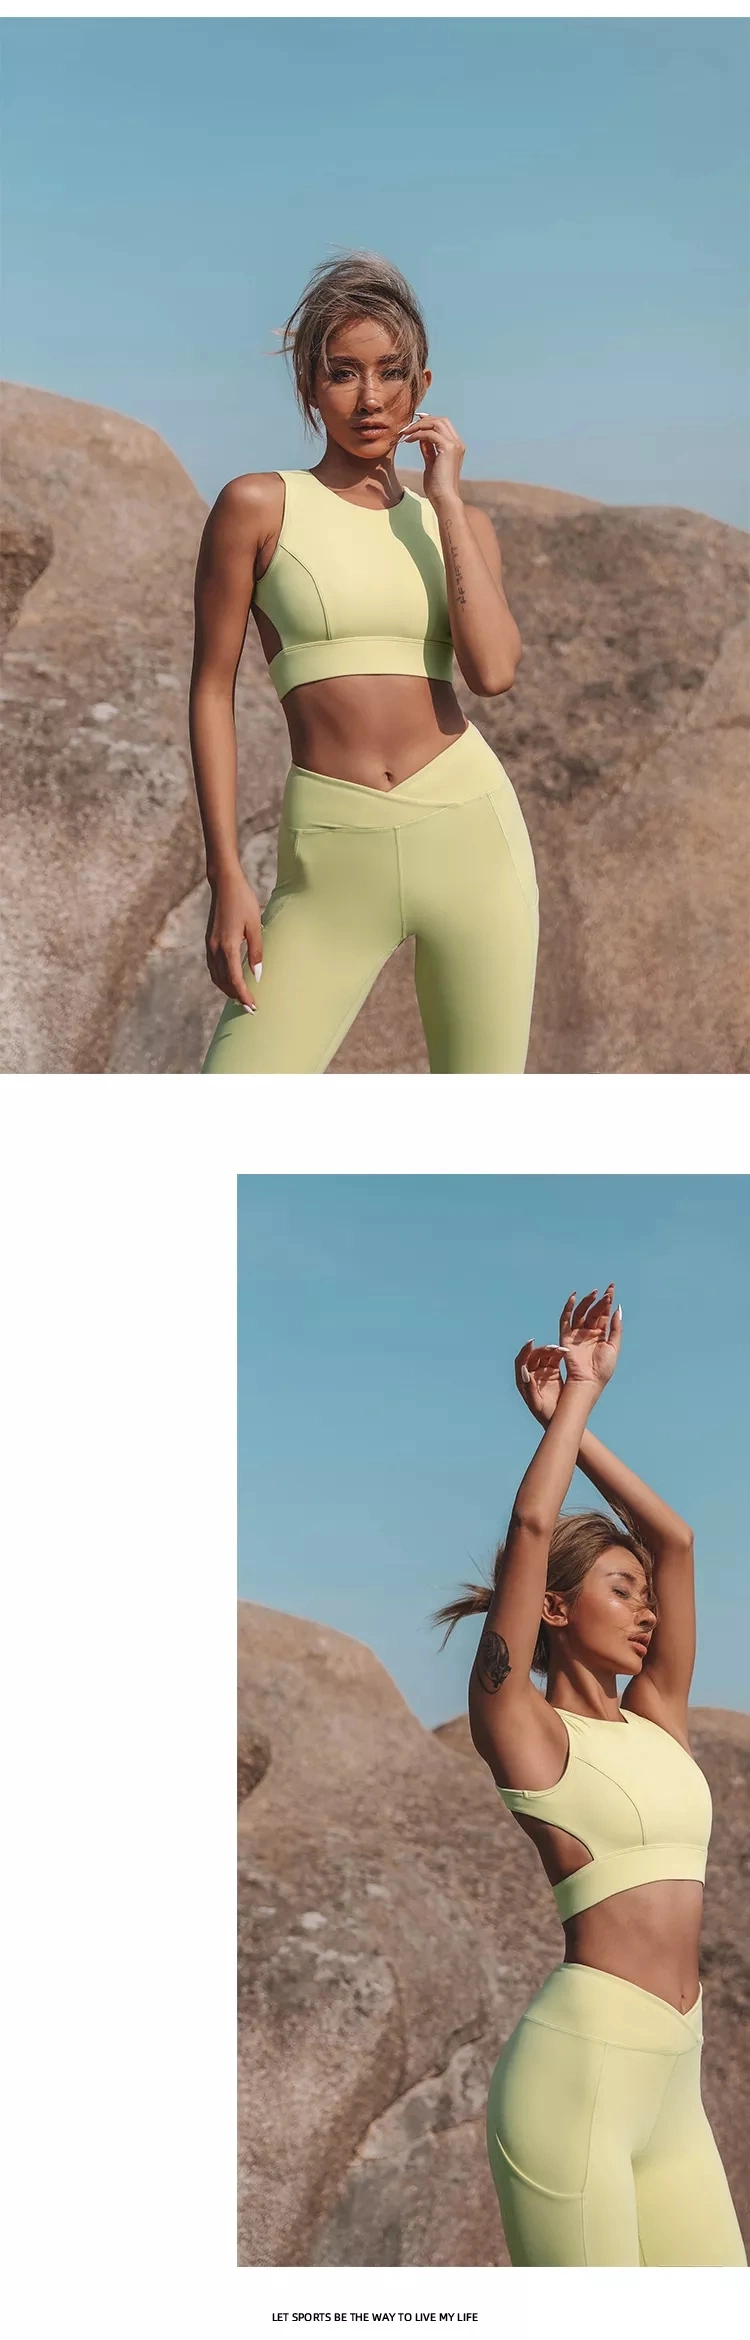 Original Designs Sporstwear Women′s Yoga Fitness Gym Set Breathable Squat Proof Yoga Wear Leggings